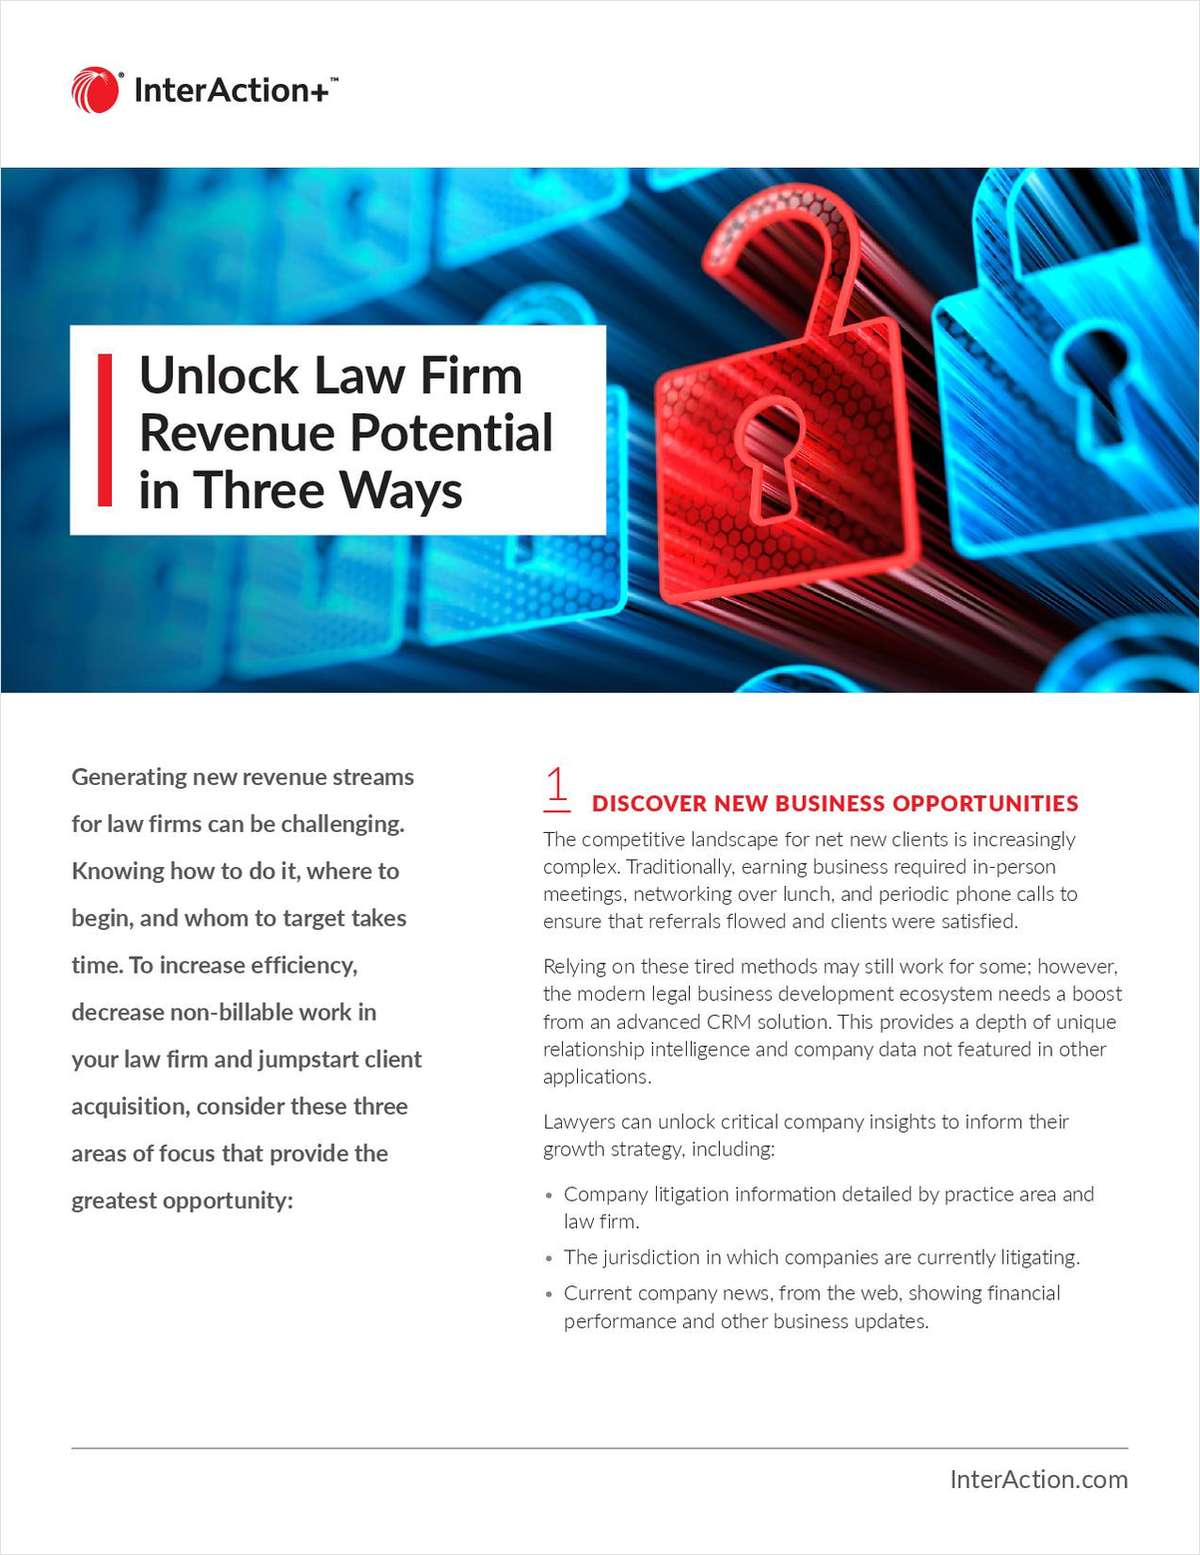 Unlock Law Firm Revenue Potential in 3 Ways